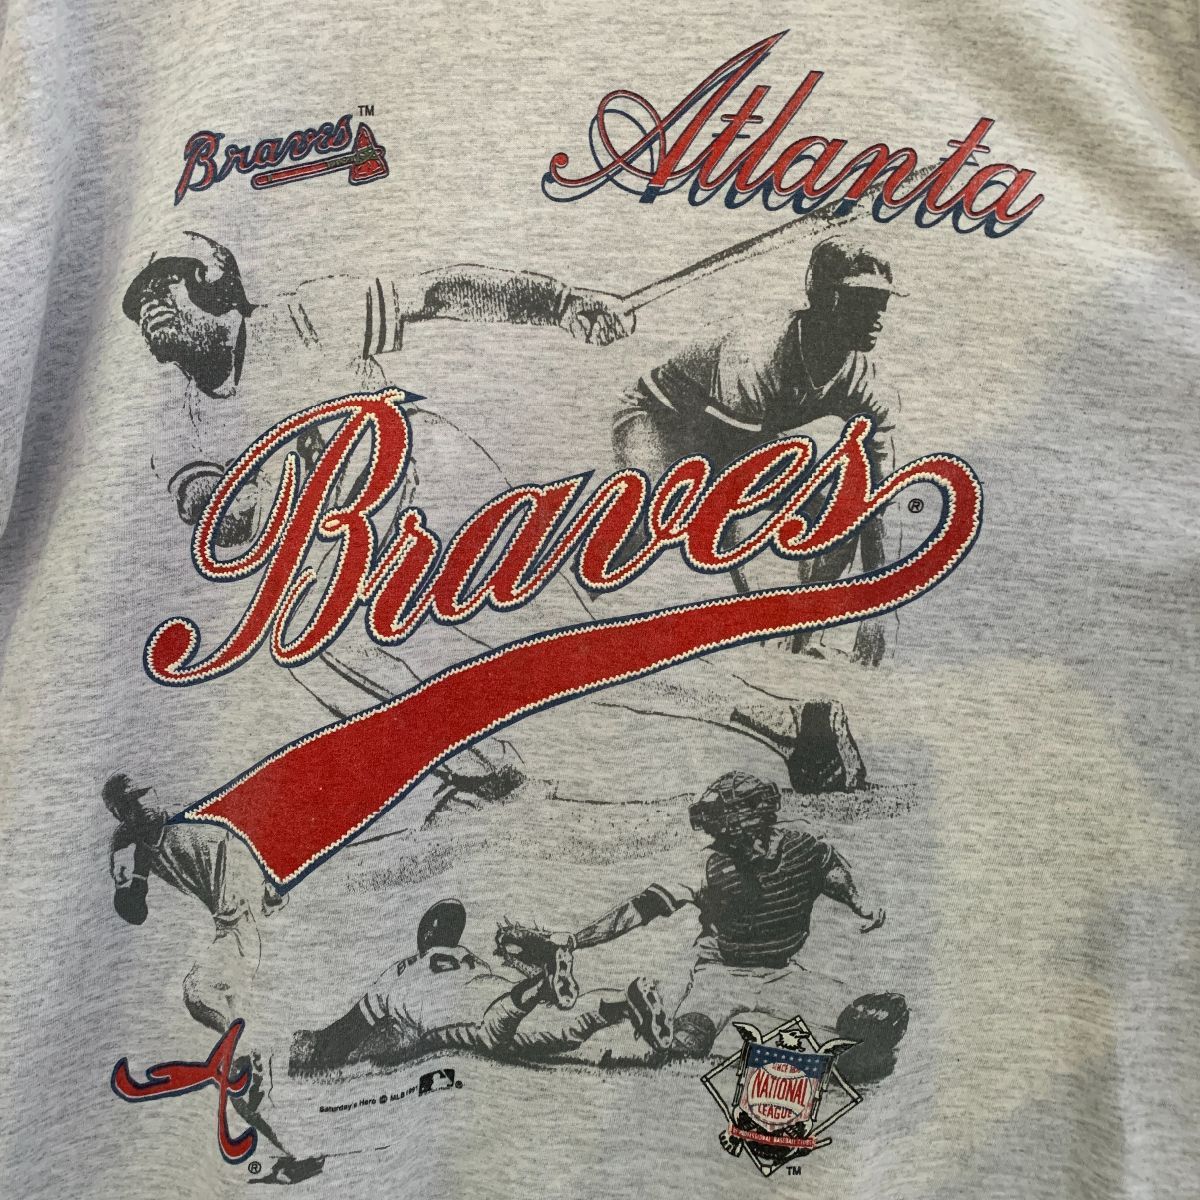 Retro Atlanta Braves Vintage MLB Baseball Gear T Shirt